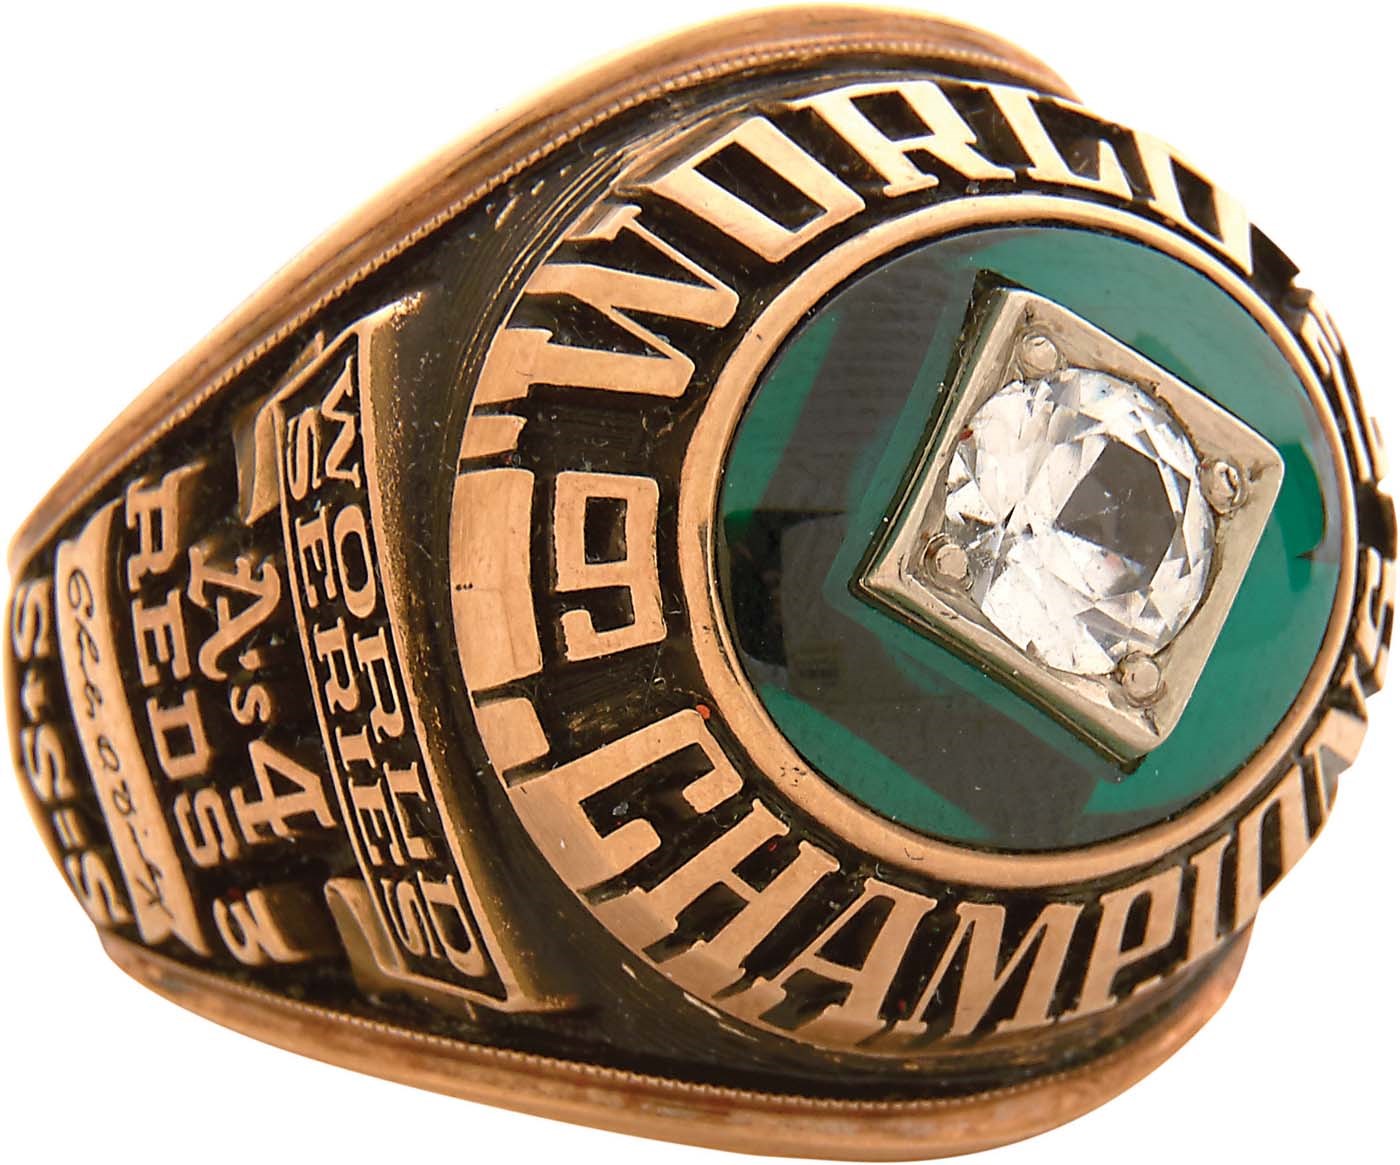 Sports Rings And Awards - Charles O. Finley 1972 Oakland Athletics World Series Championship Ring